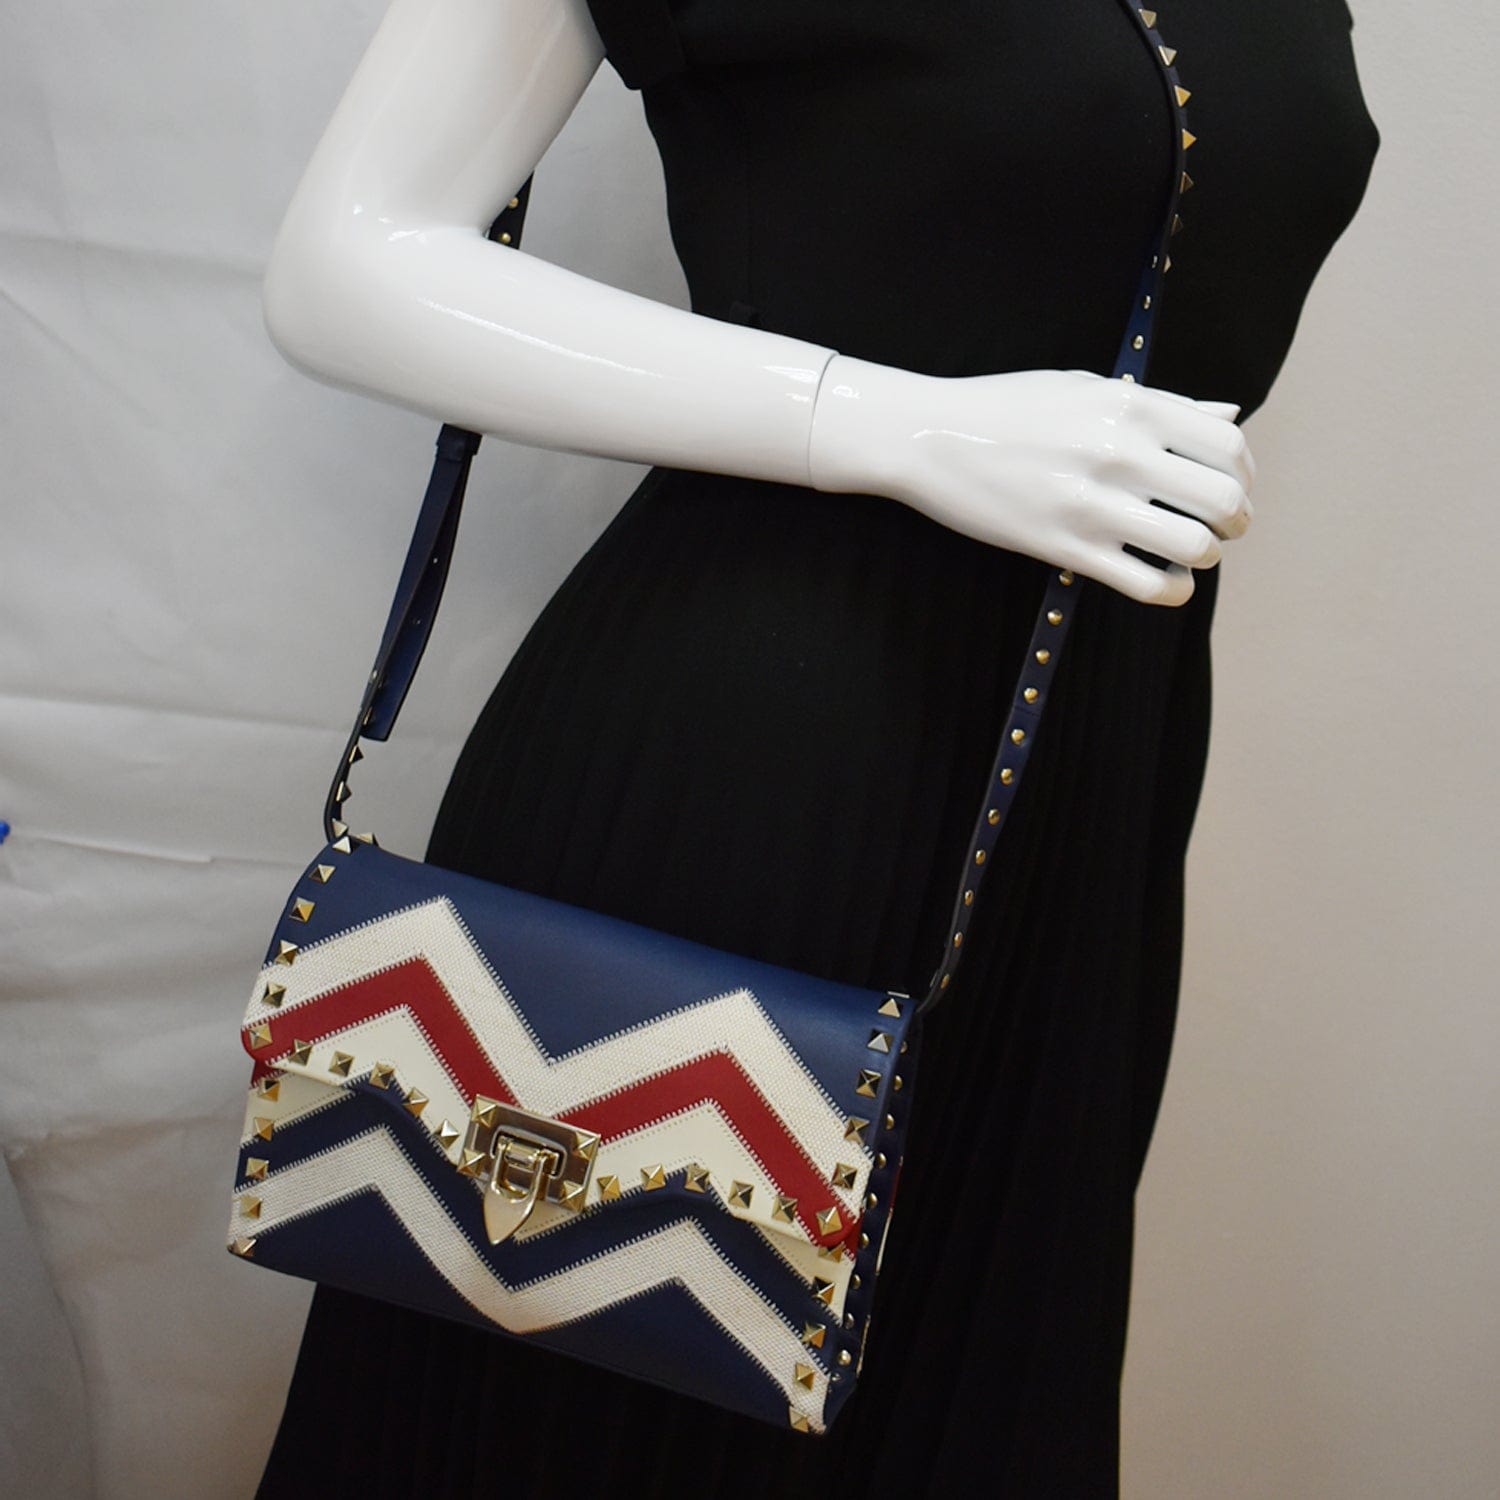 Valentino Garavani Bags for Women, Rockstud